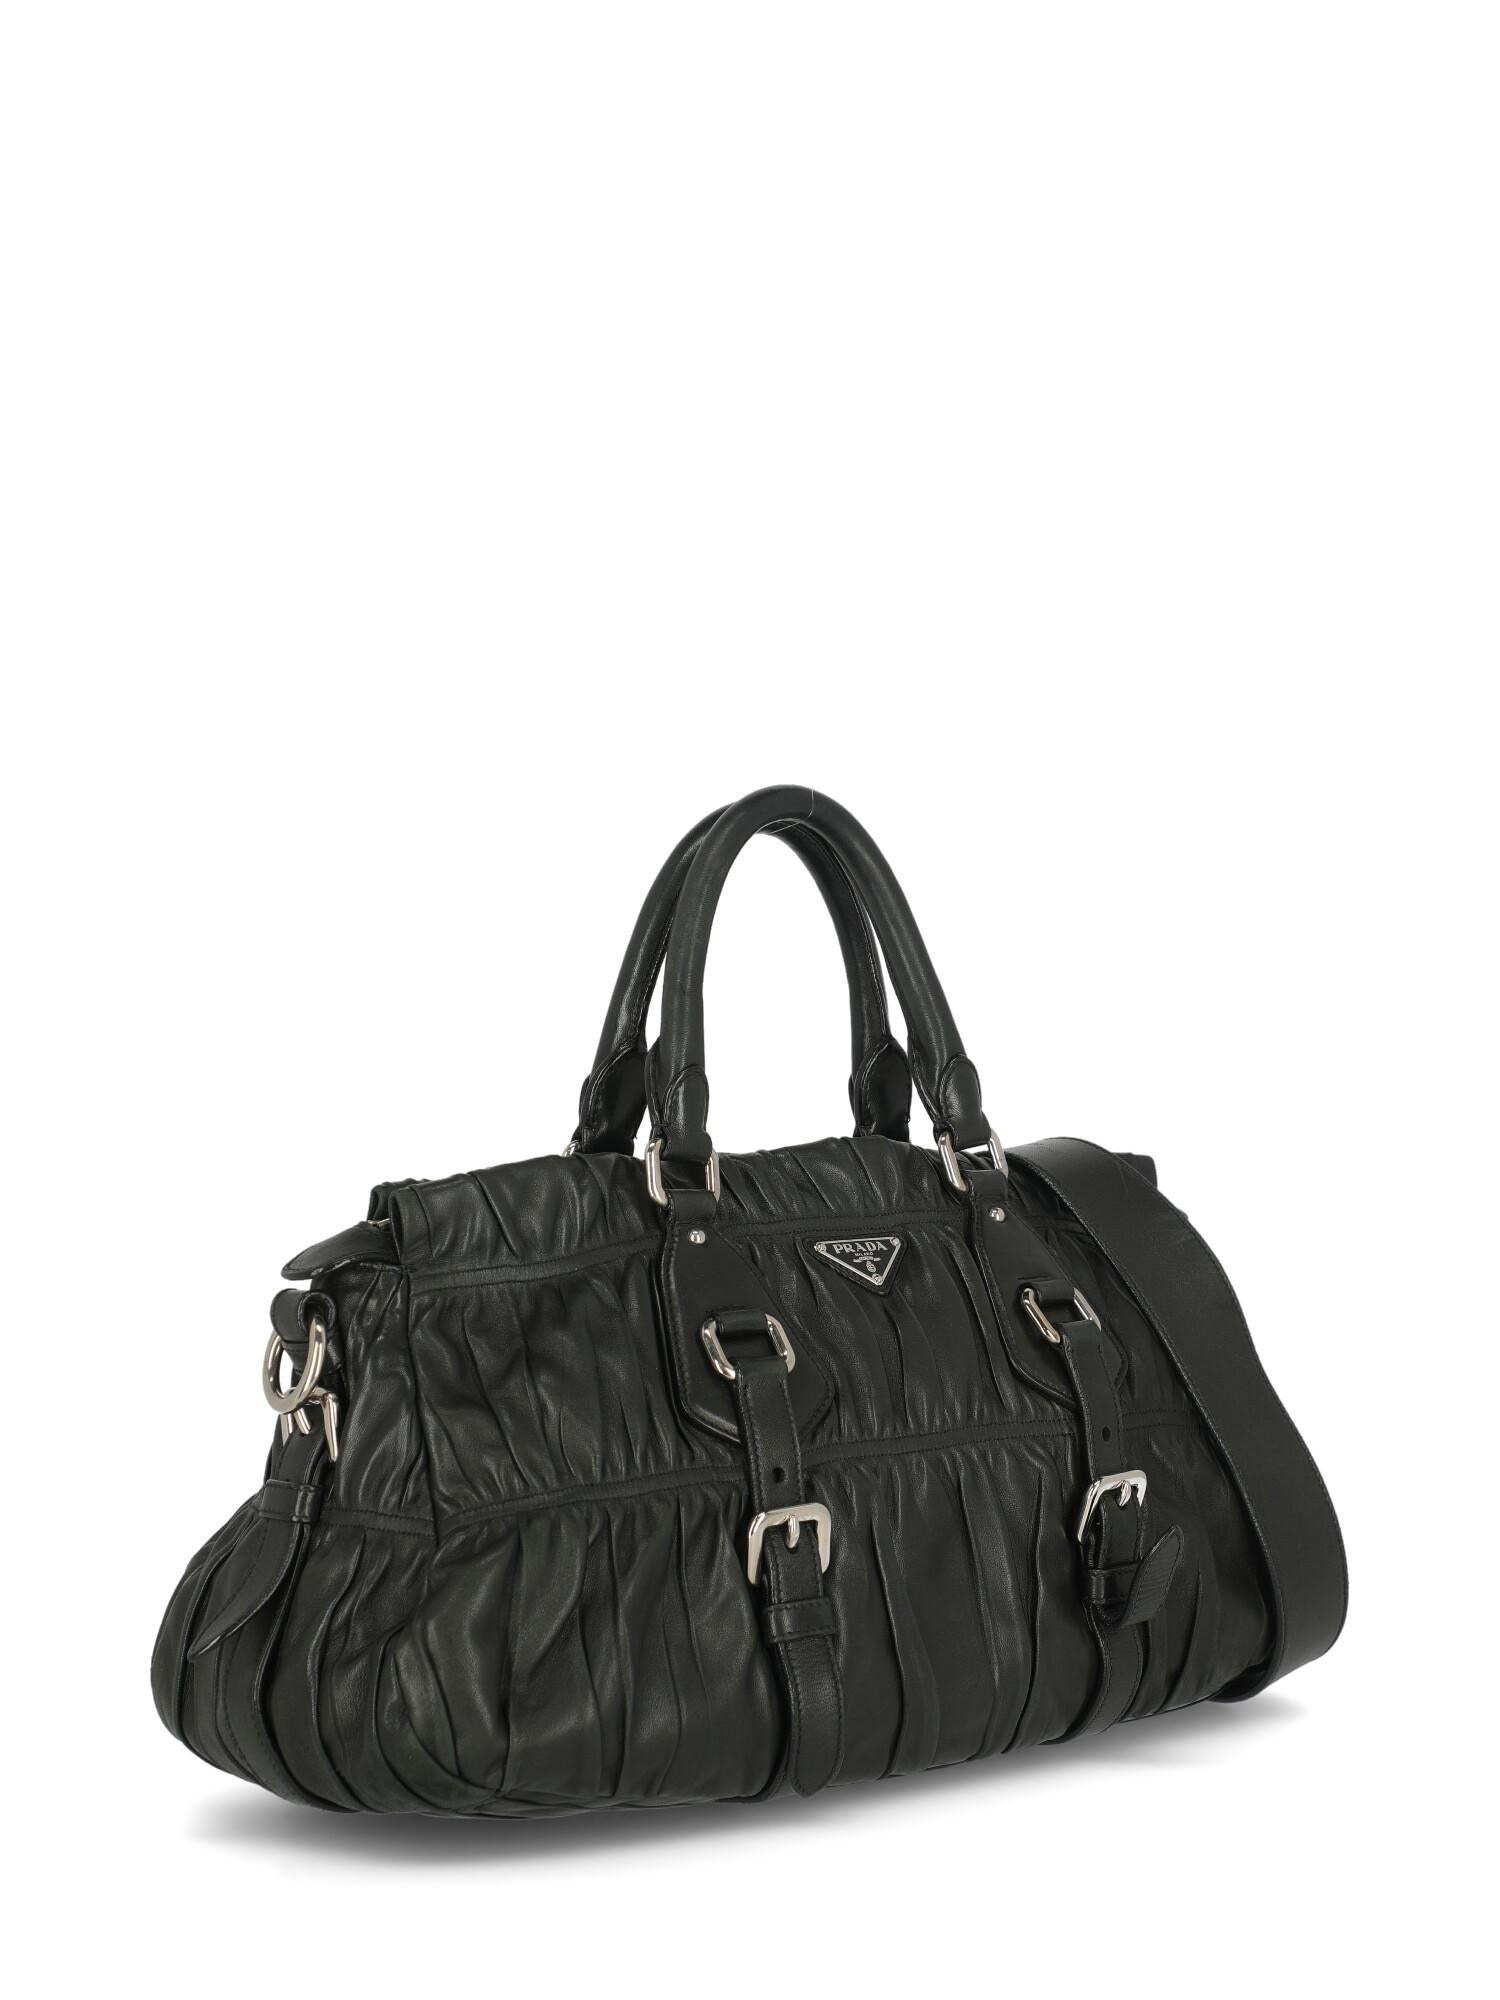 Prada Women Handbags Black Leather  In Fair Condition For Sale In Milan, IT